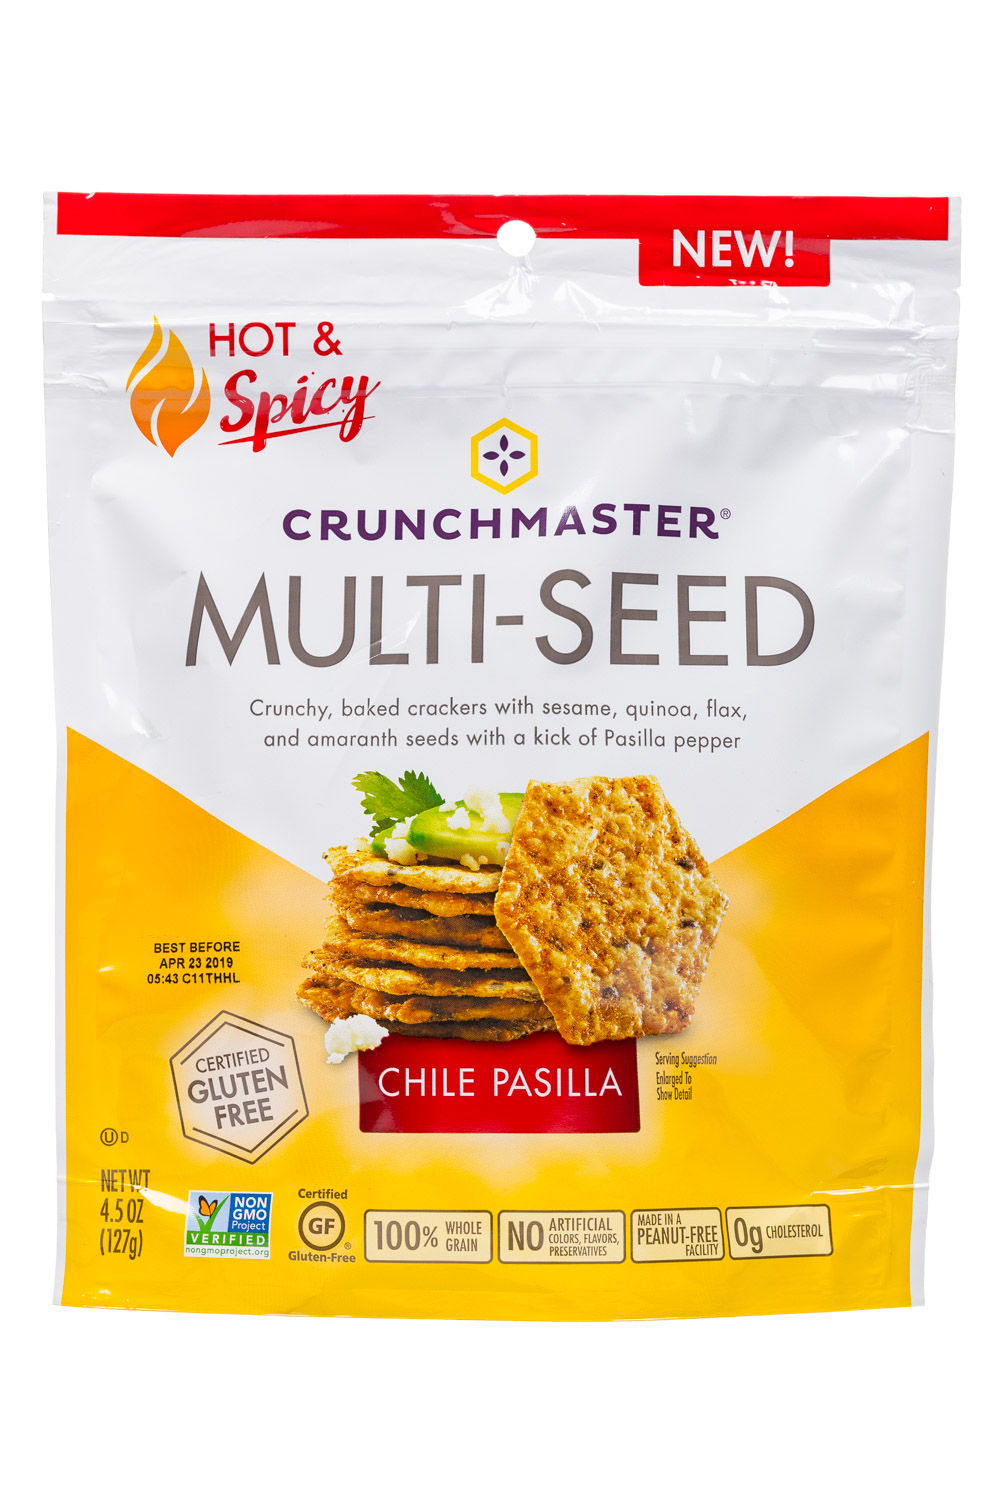 Multi-Seed: Chile Pasilla